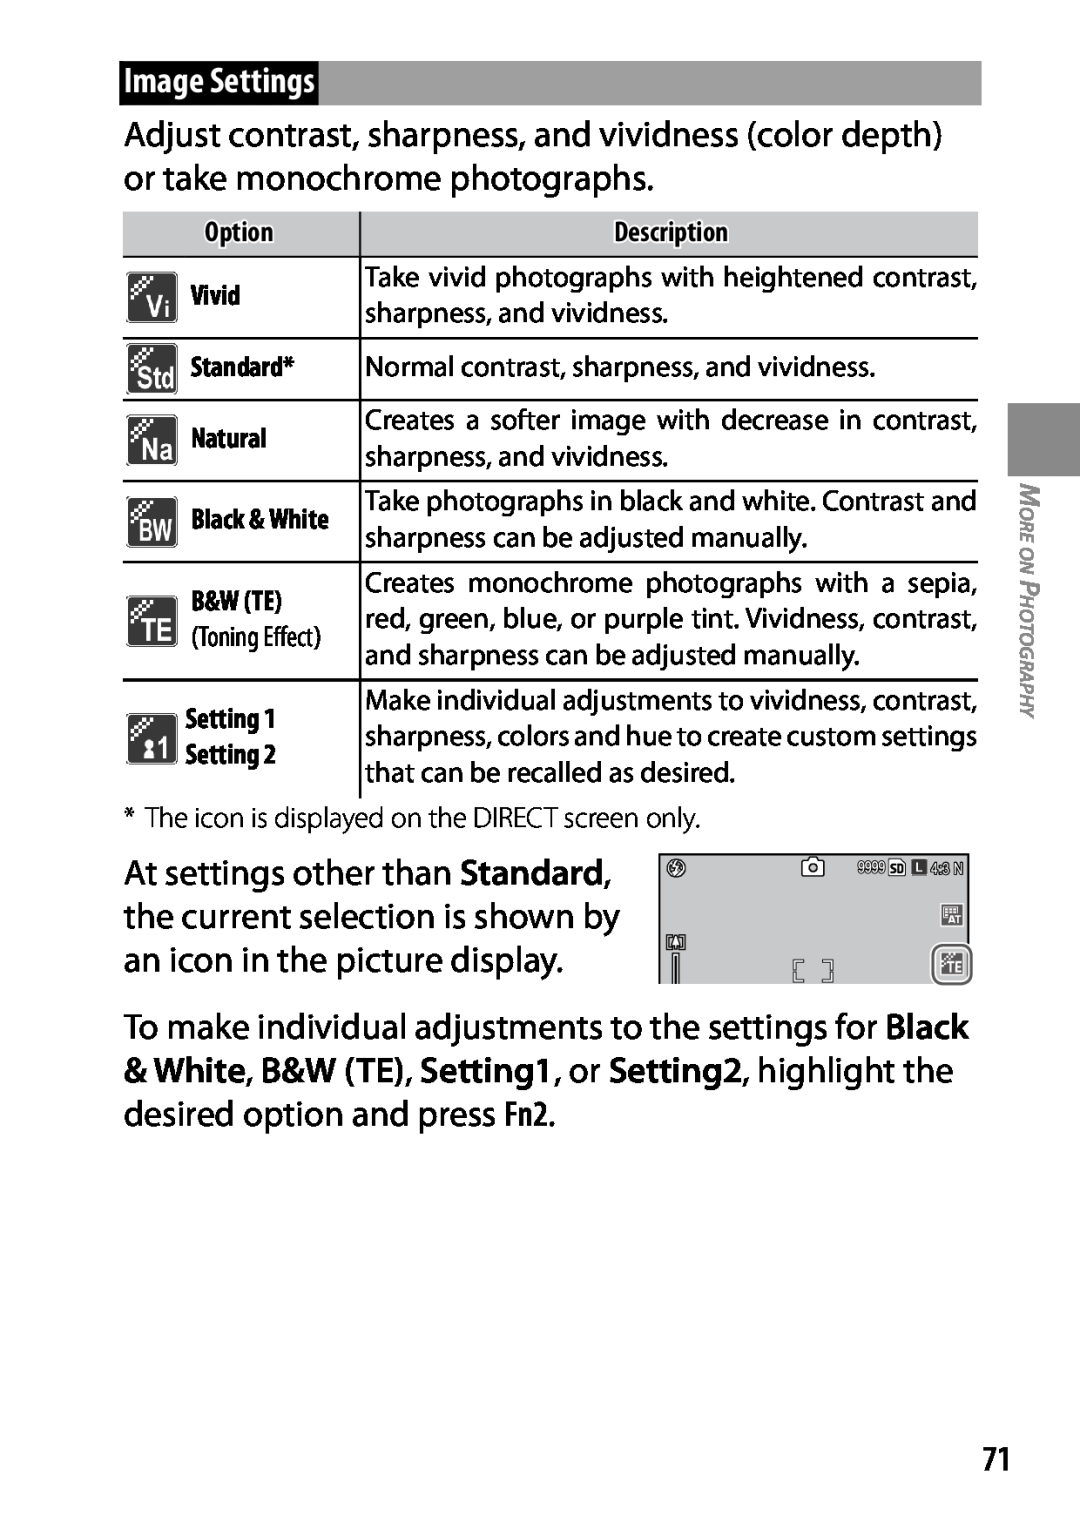 Ricoh 170553, GXR, 170543 manual Image Settings, Creates monochrome photographs with a sepia 